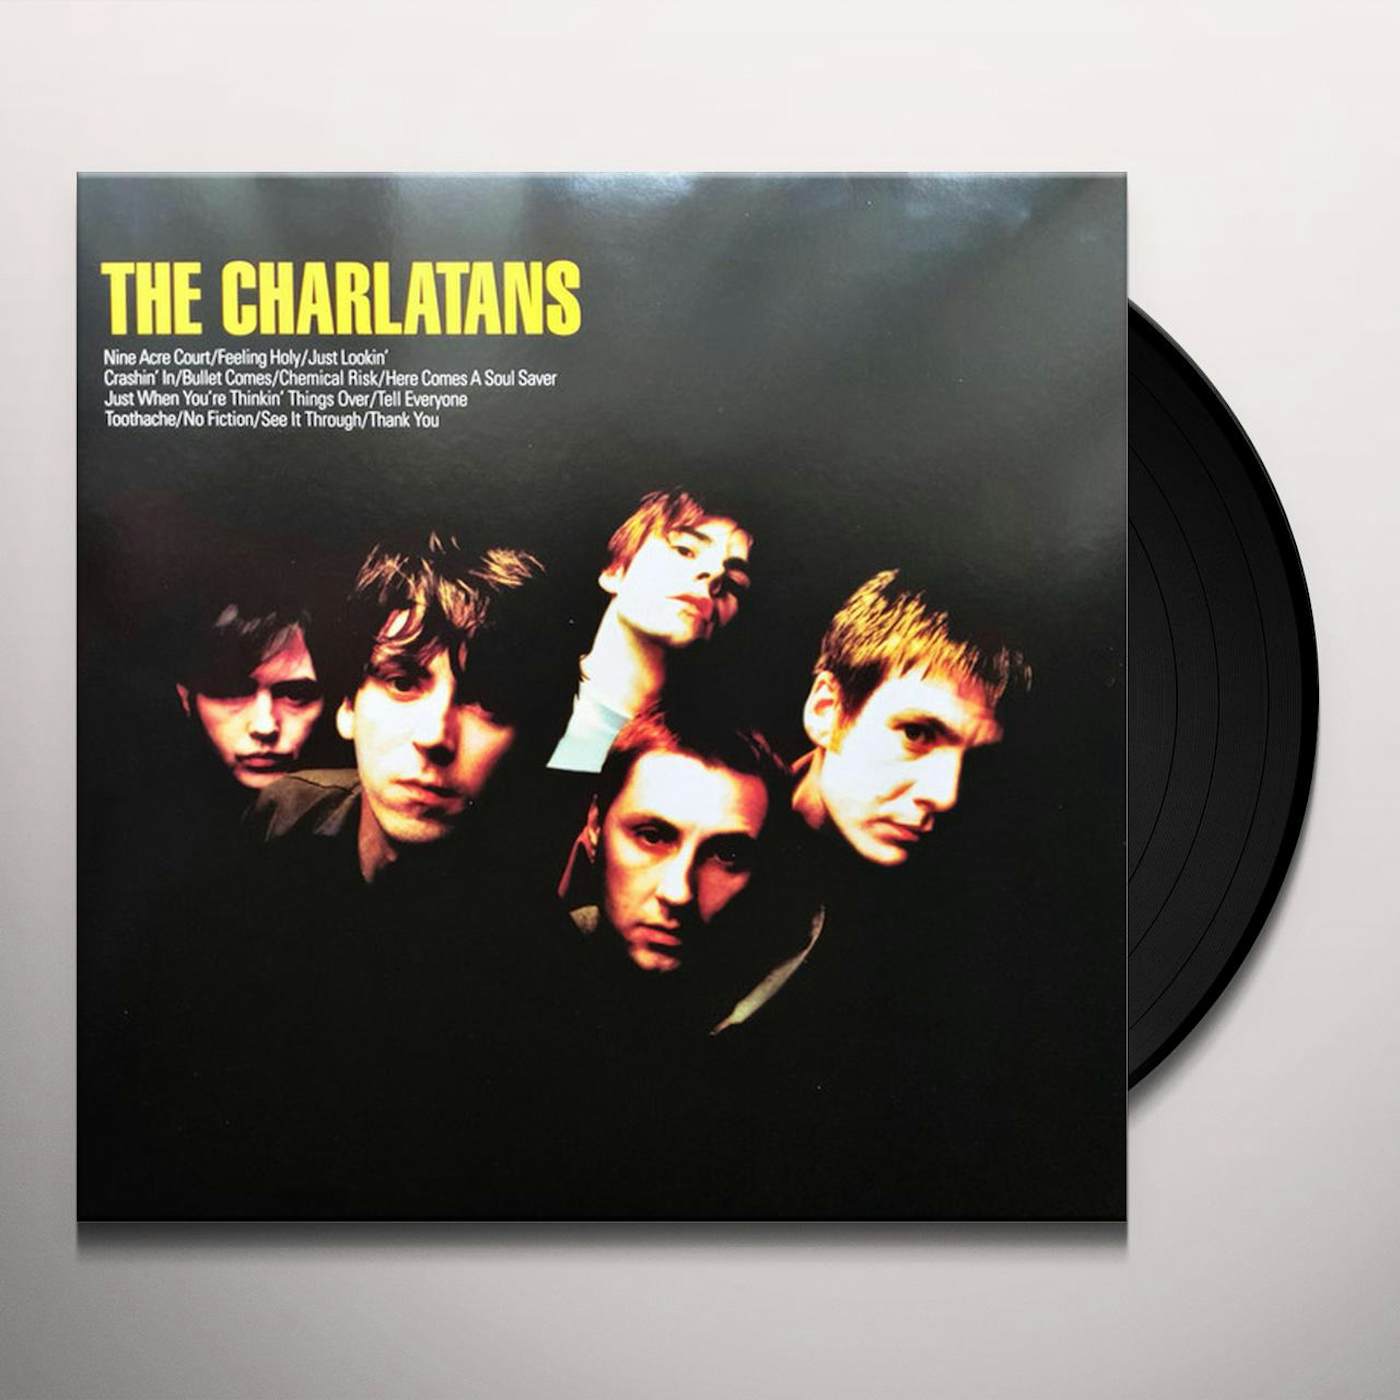 The Charlatans Vinyl Record